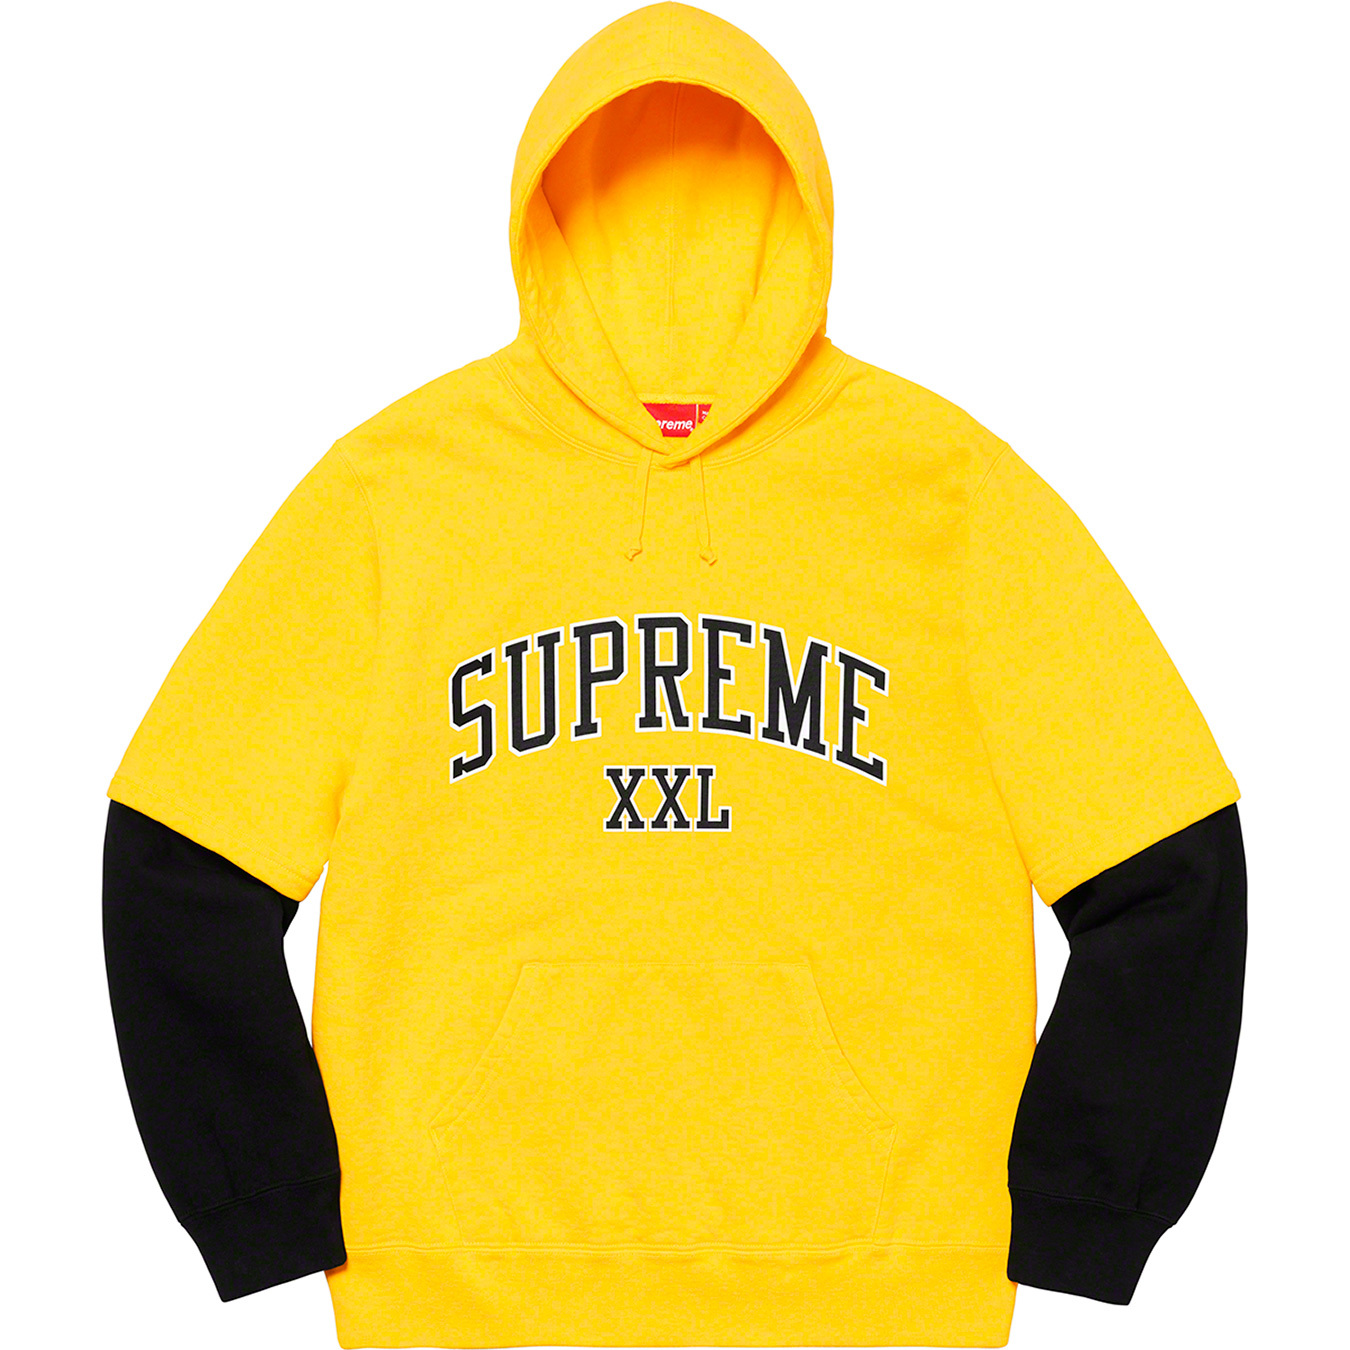 supreme hoodie xxl